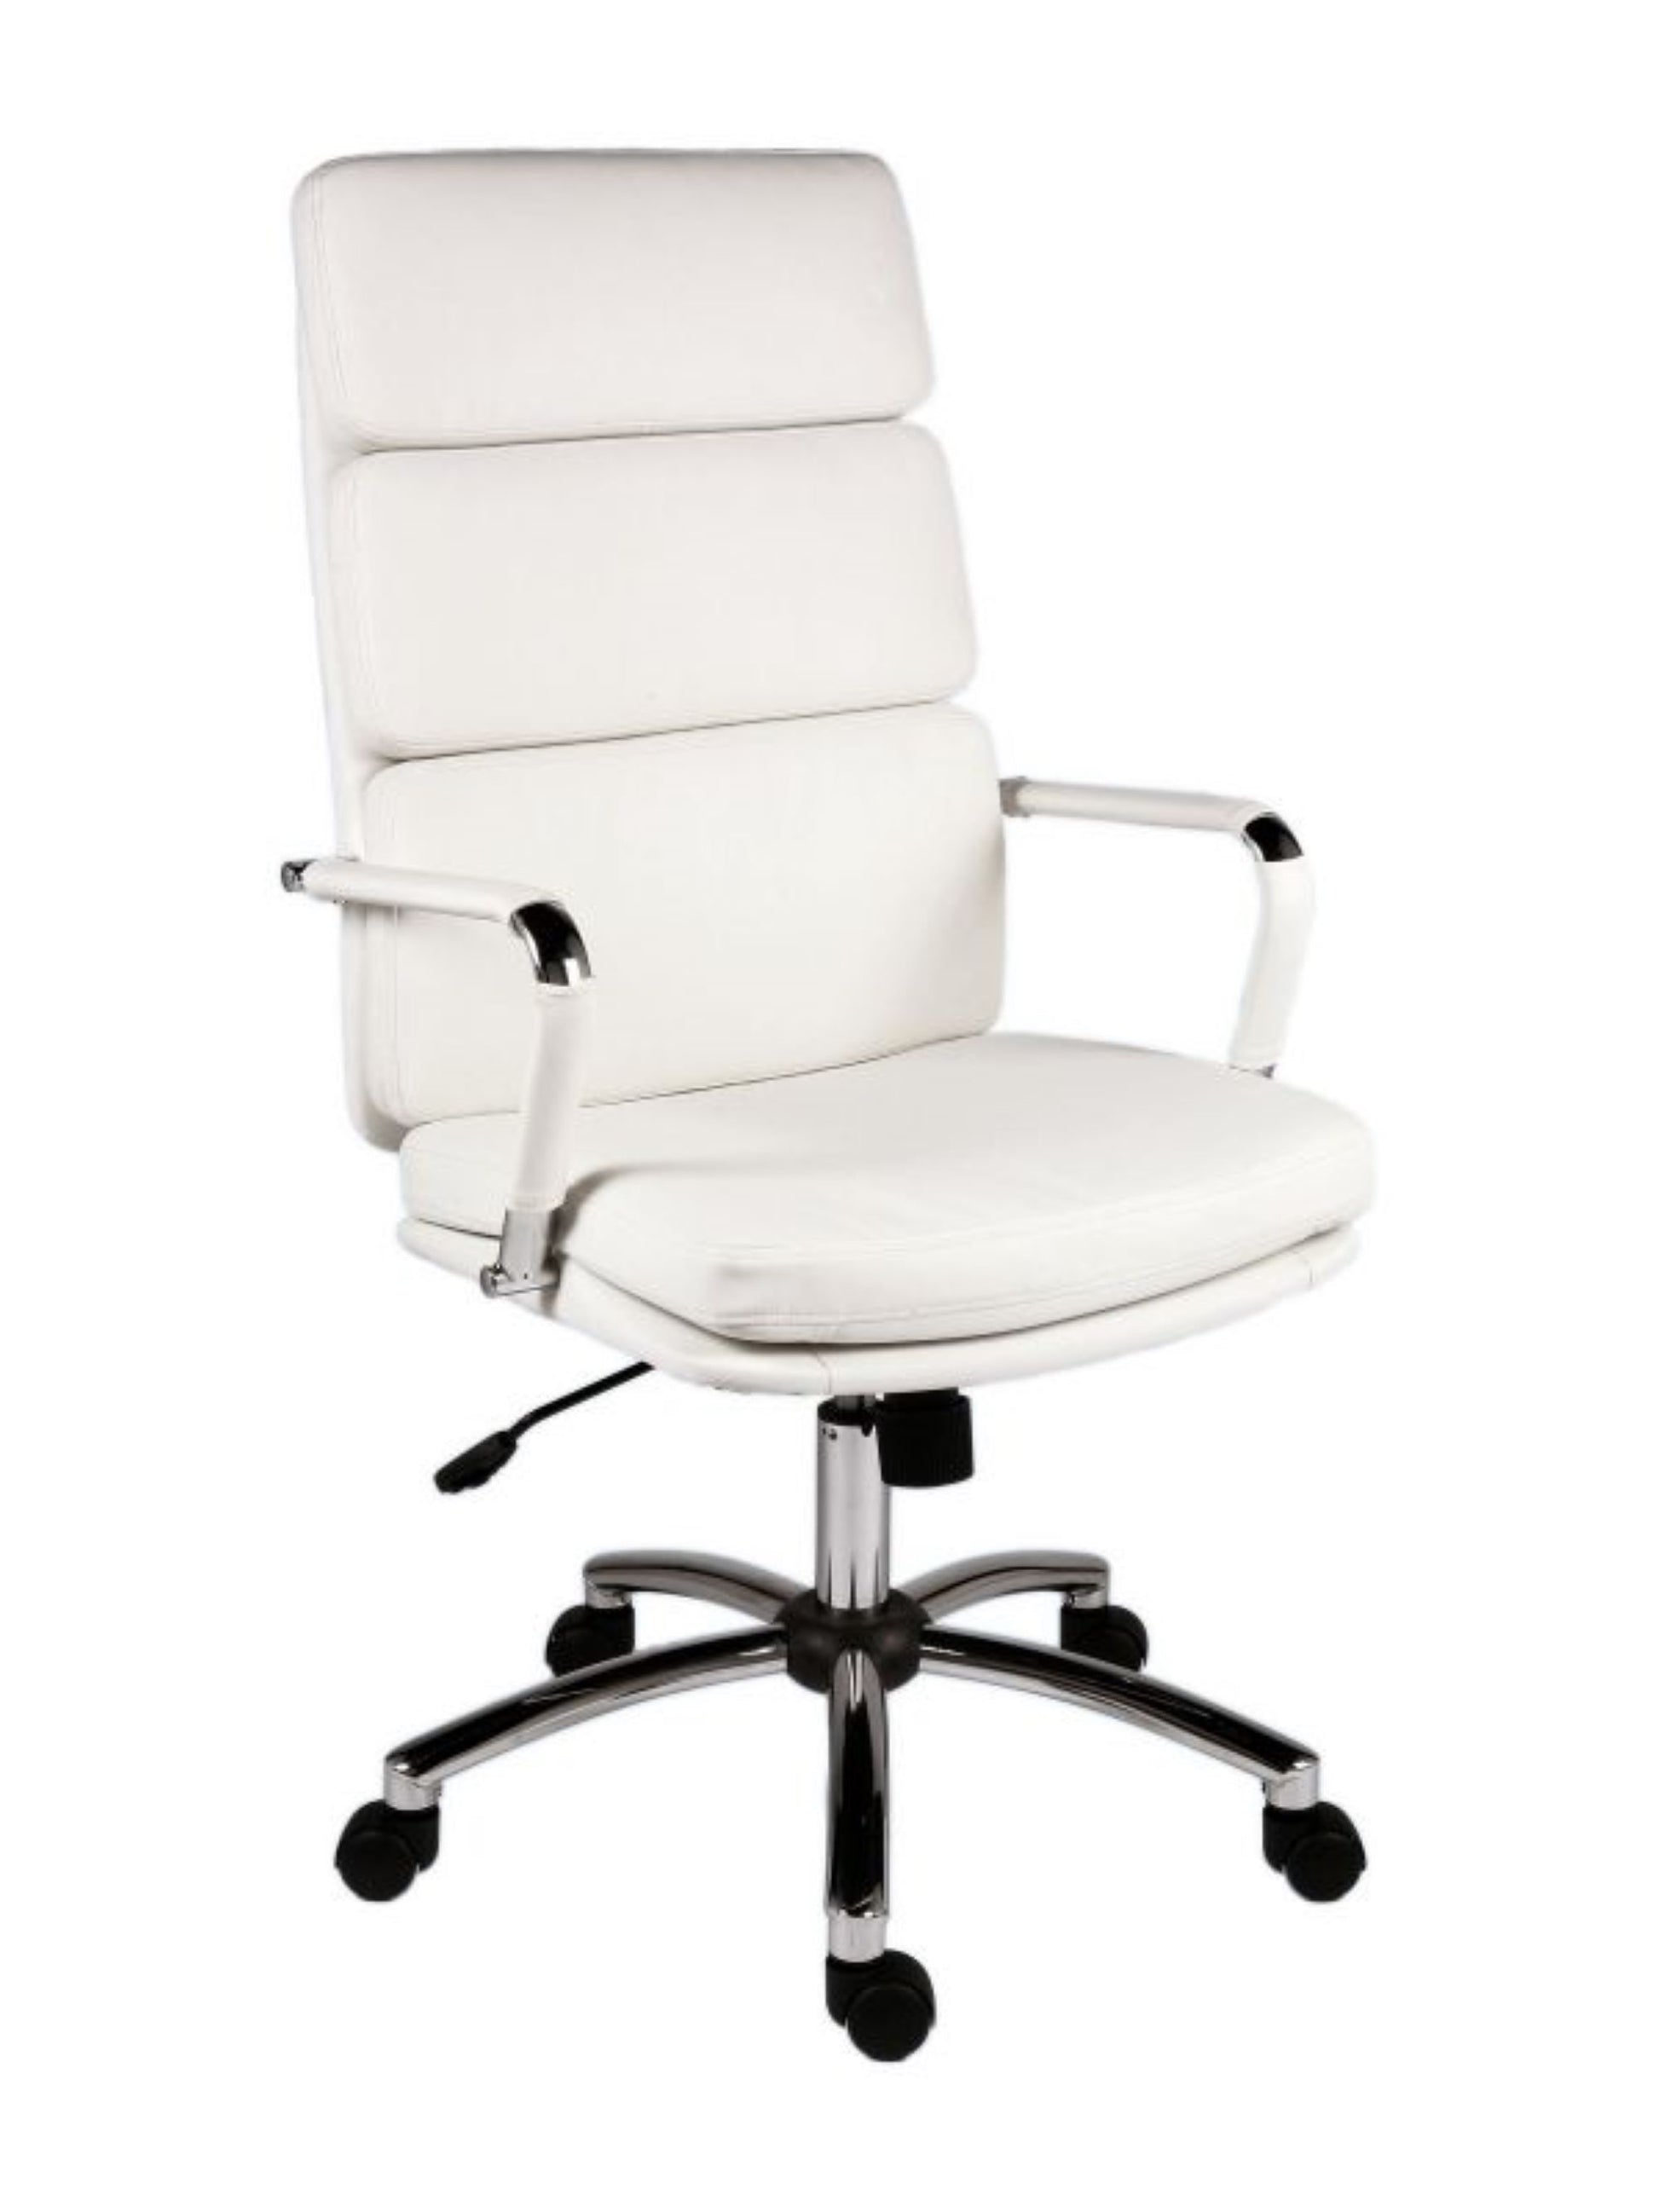 Retro style executive office chair white